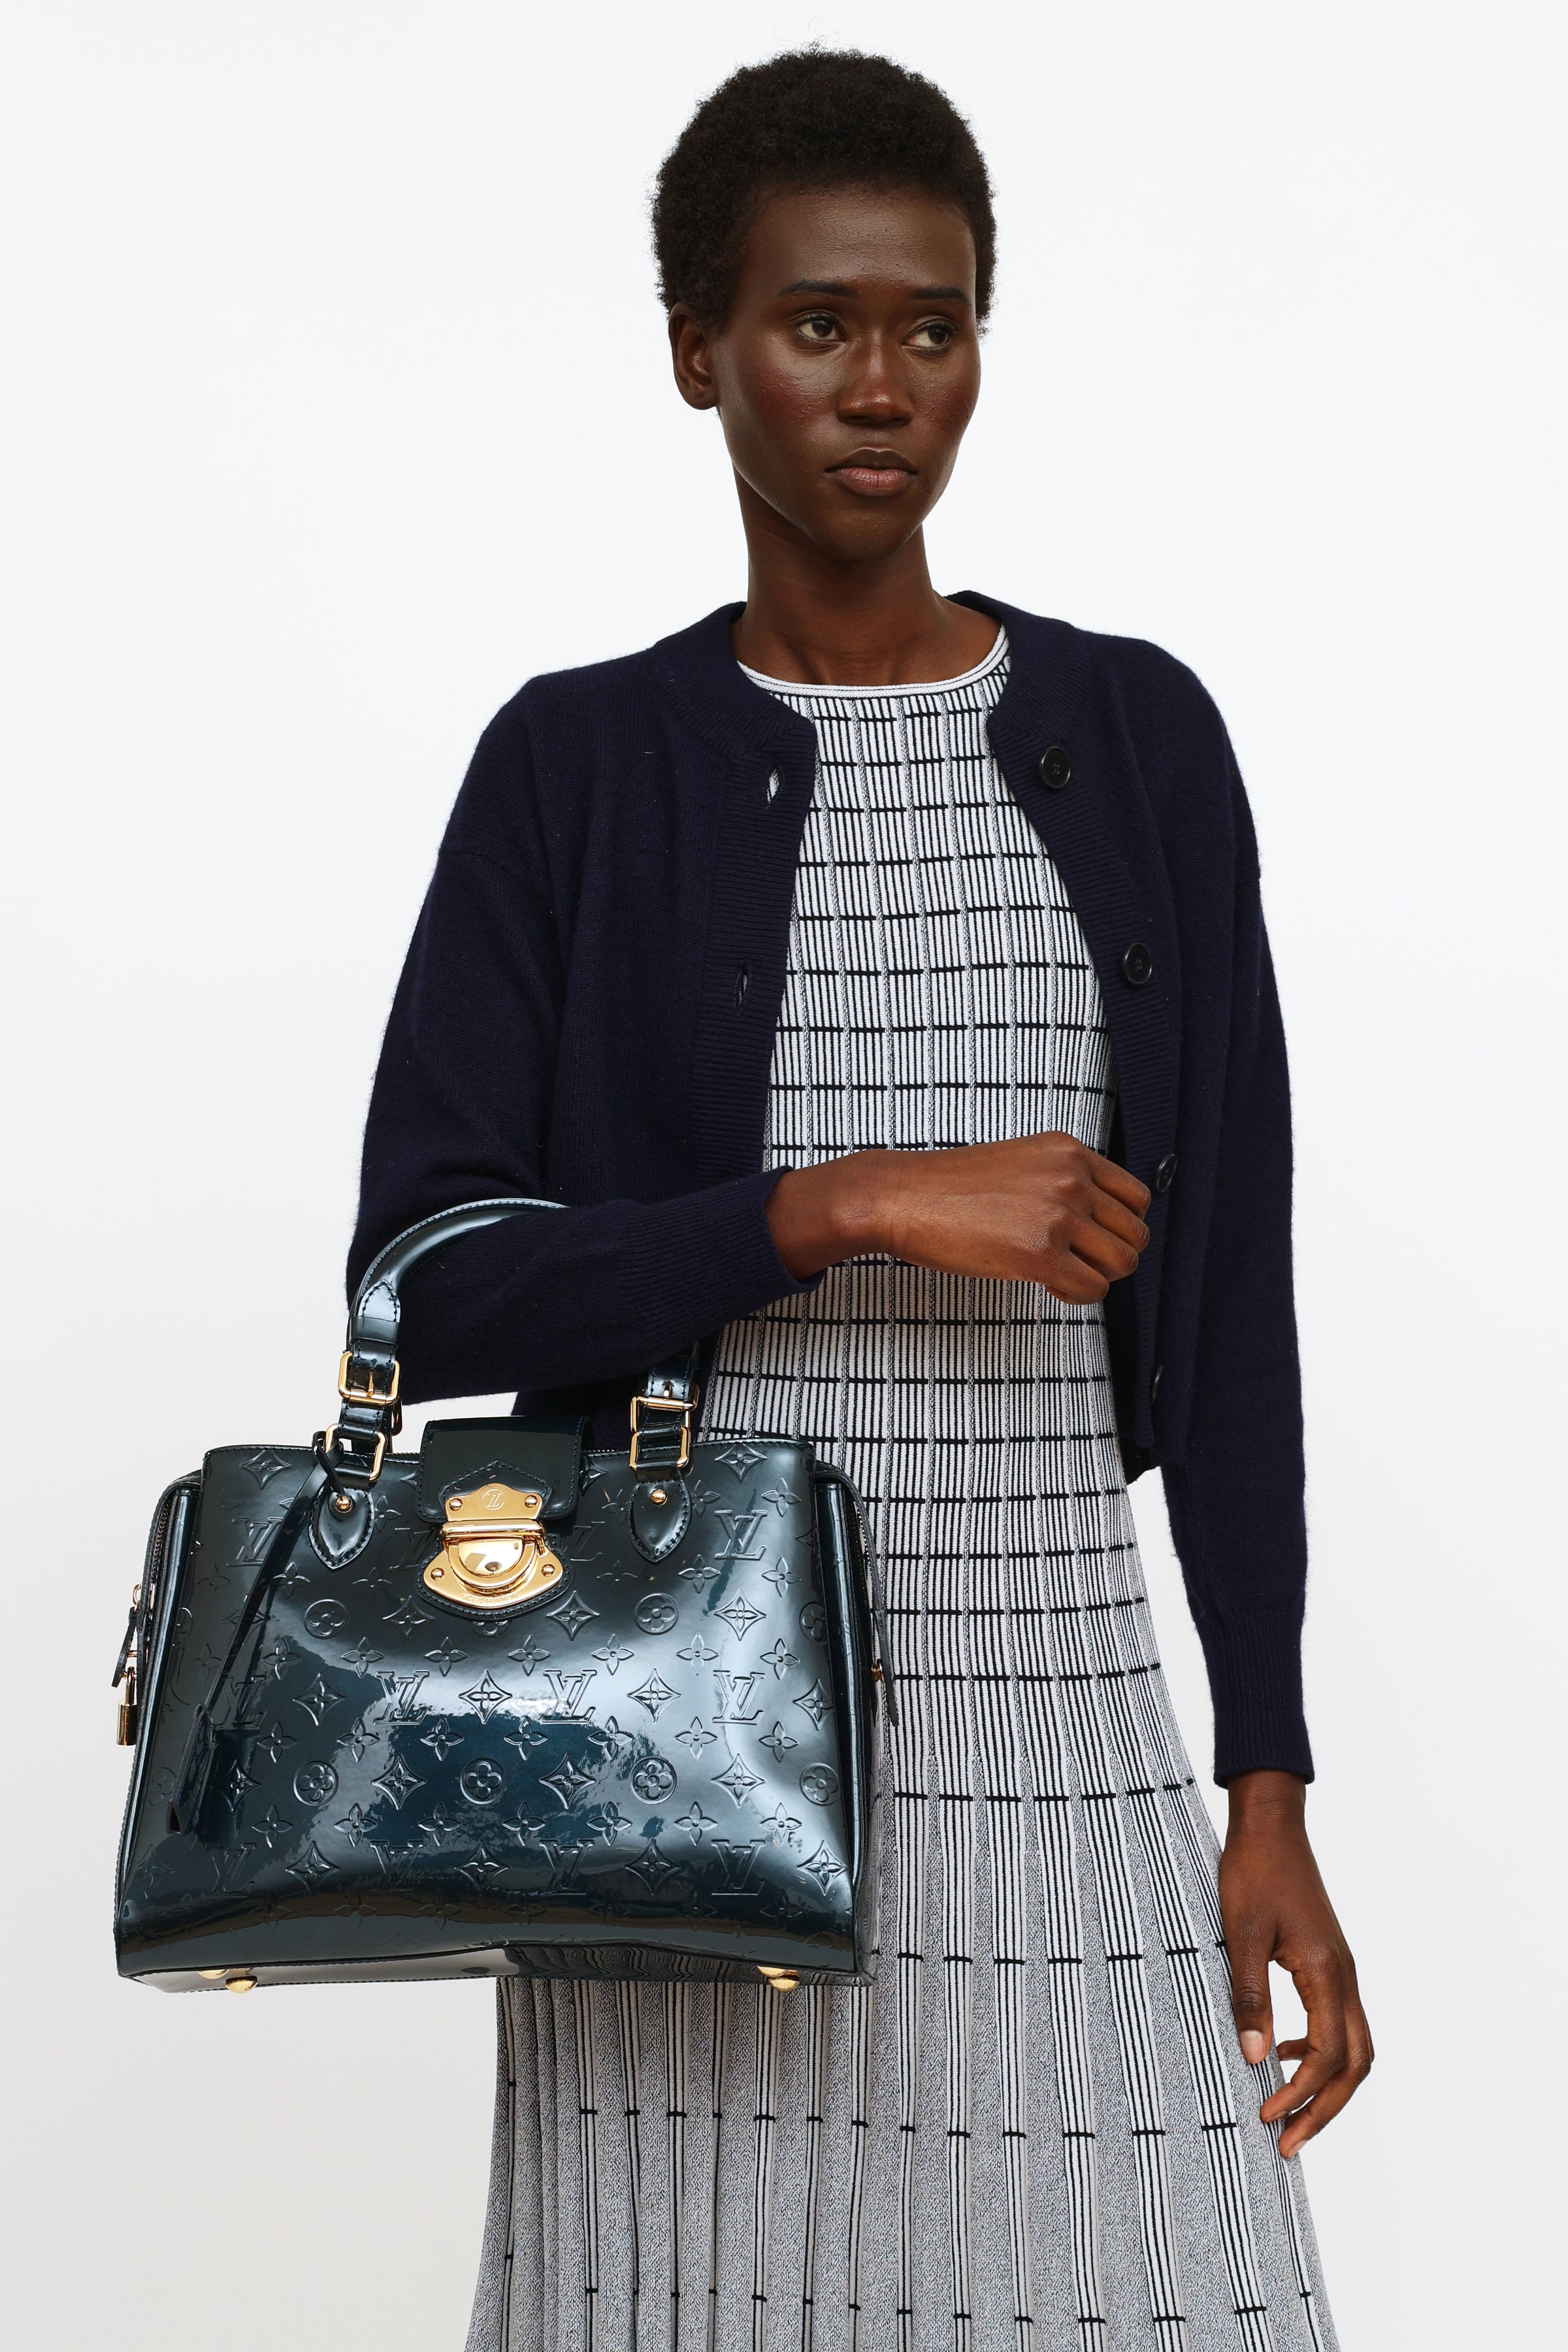 Louis Vuitton Monogram Vernis Melrose Avenue Handbag